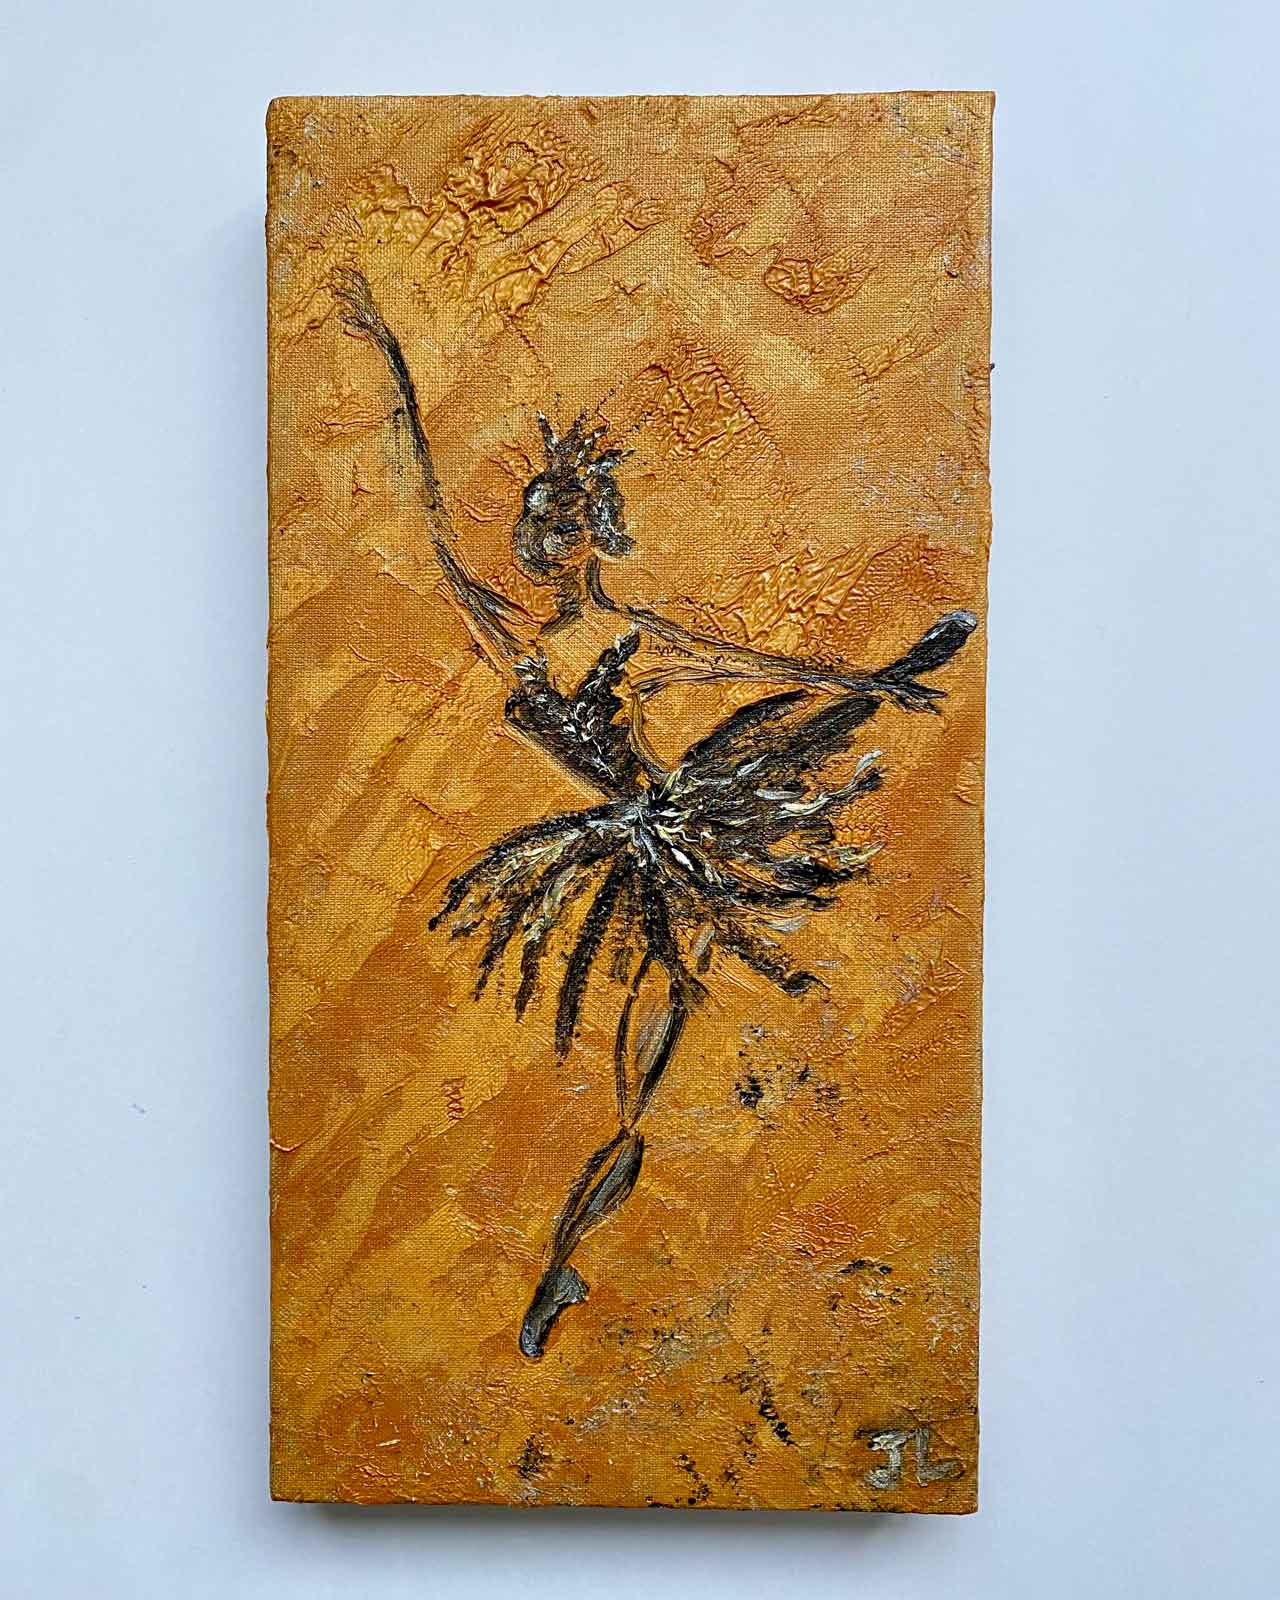 Arabesque: black and gold ballerina painting